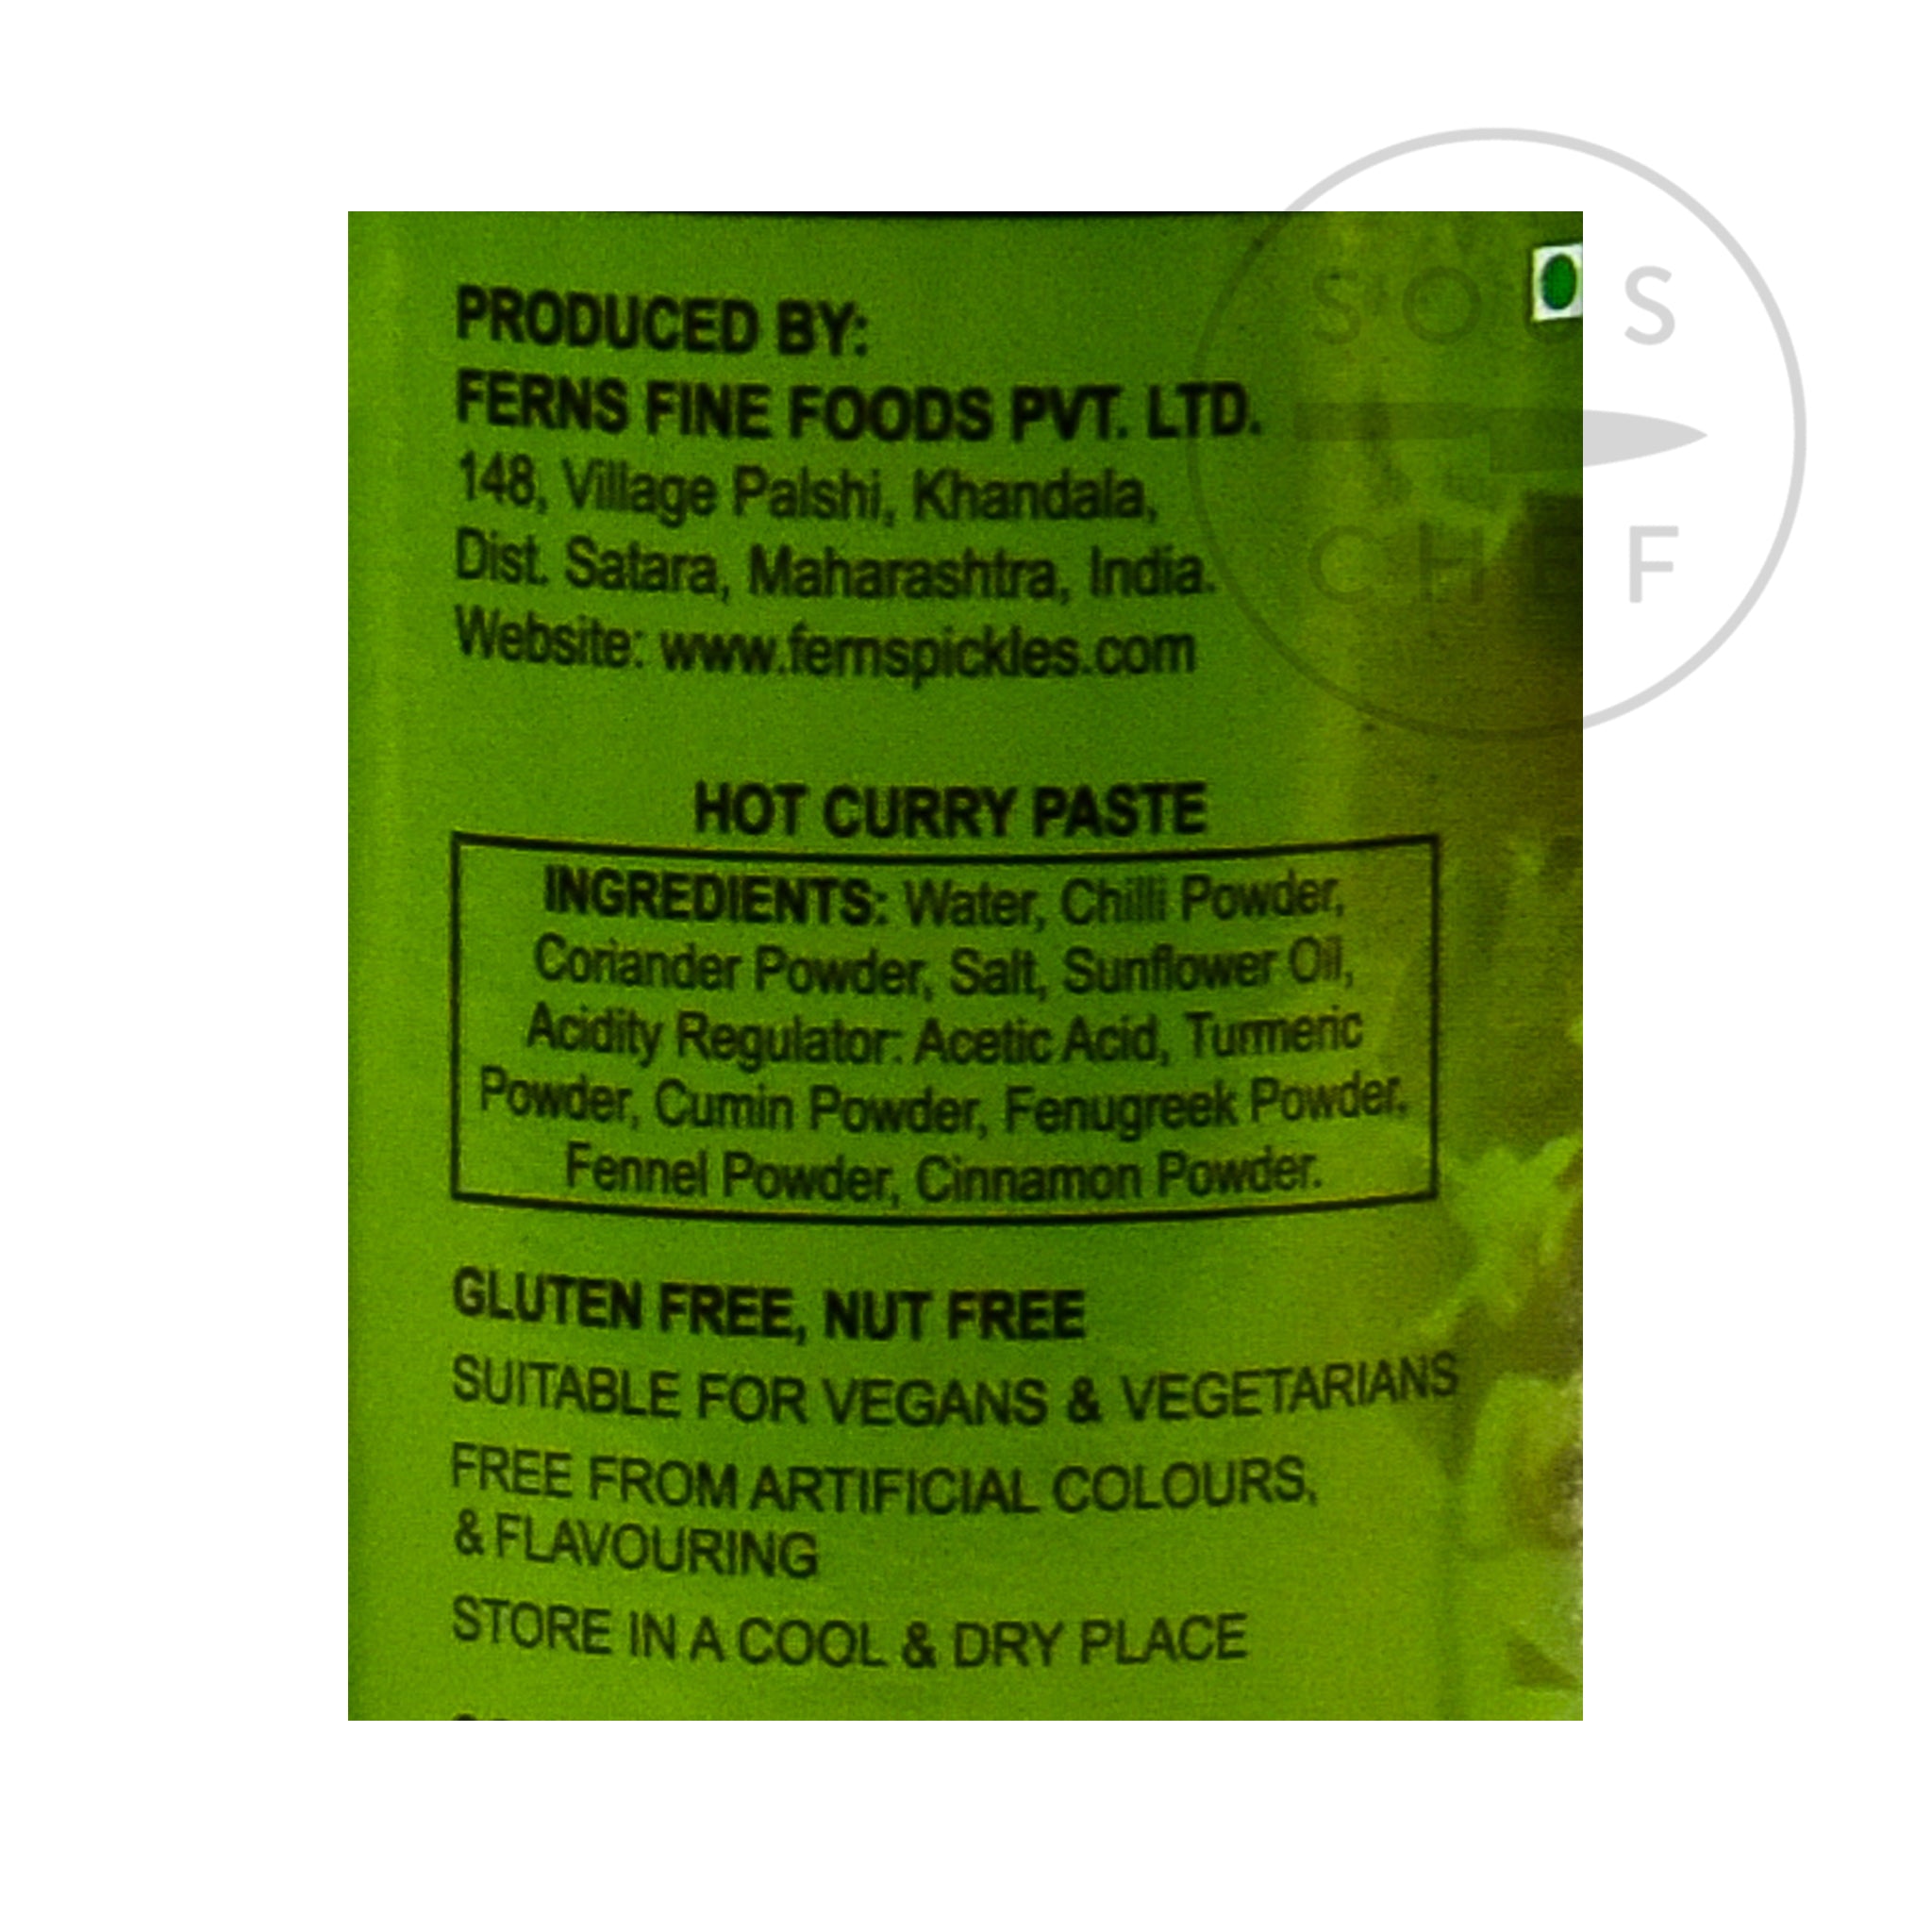 Ferns' Hot Curry Paste 380g ingredients